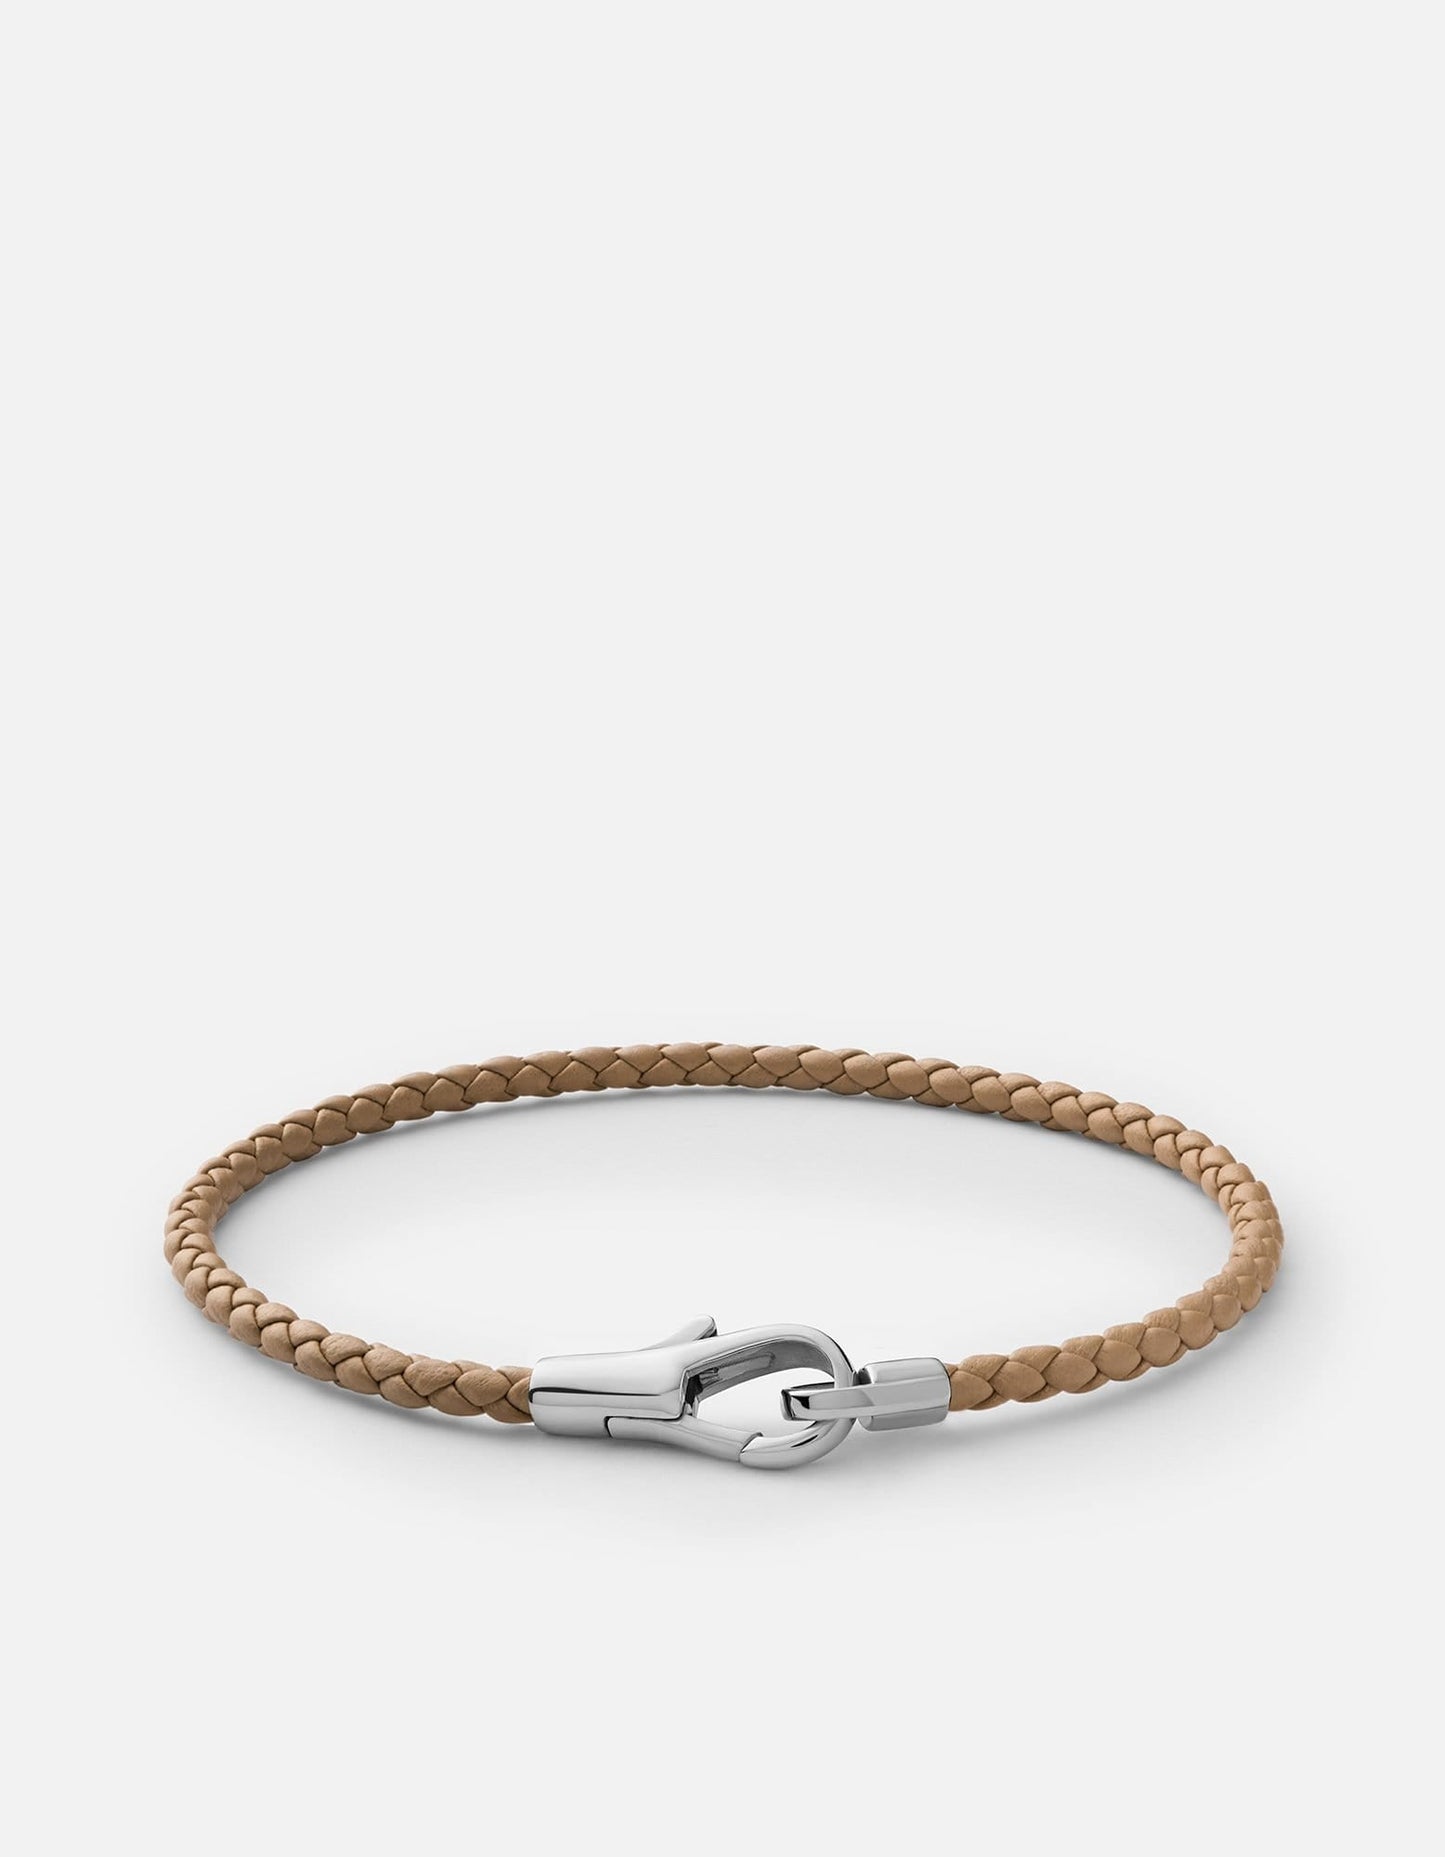 Knox Leather Bracelet, Sterling Silver